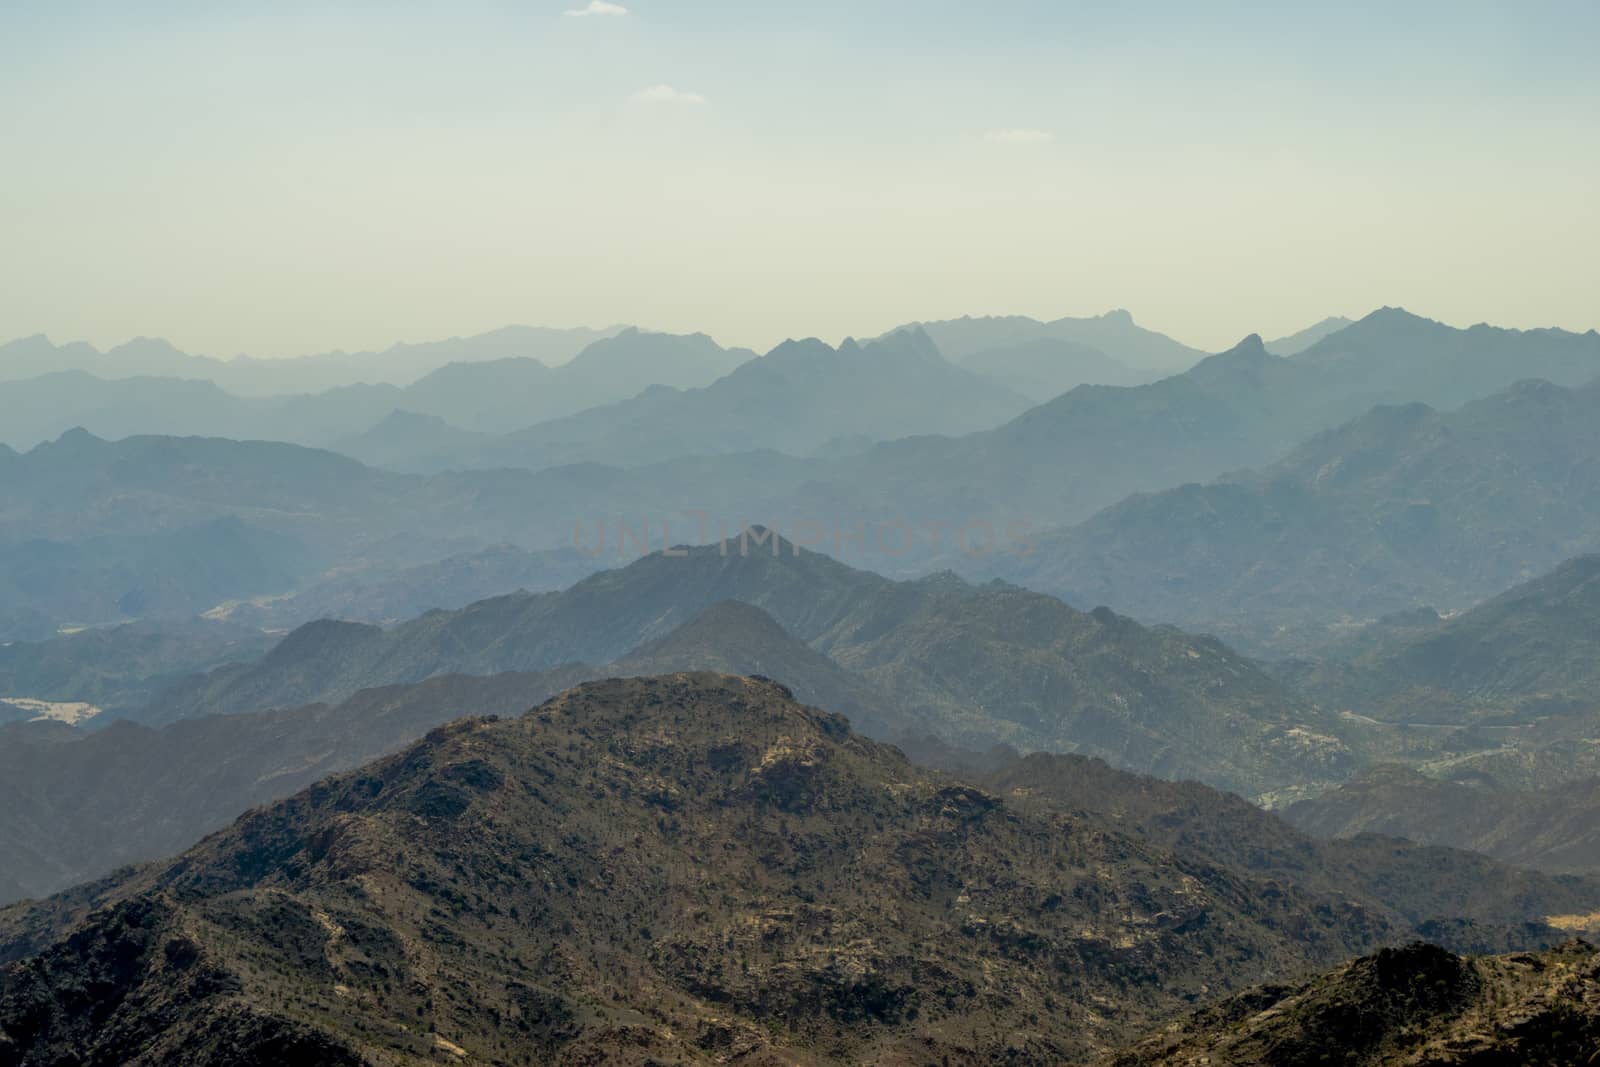 Tiaf mountains in Saudi Arabia with amazing shadows by wael_alreweie